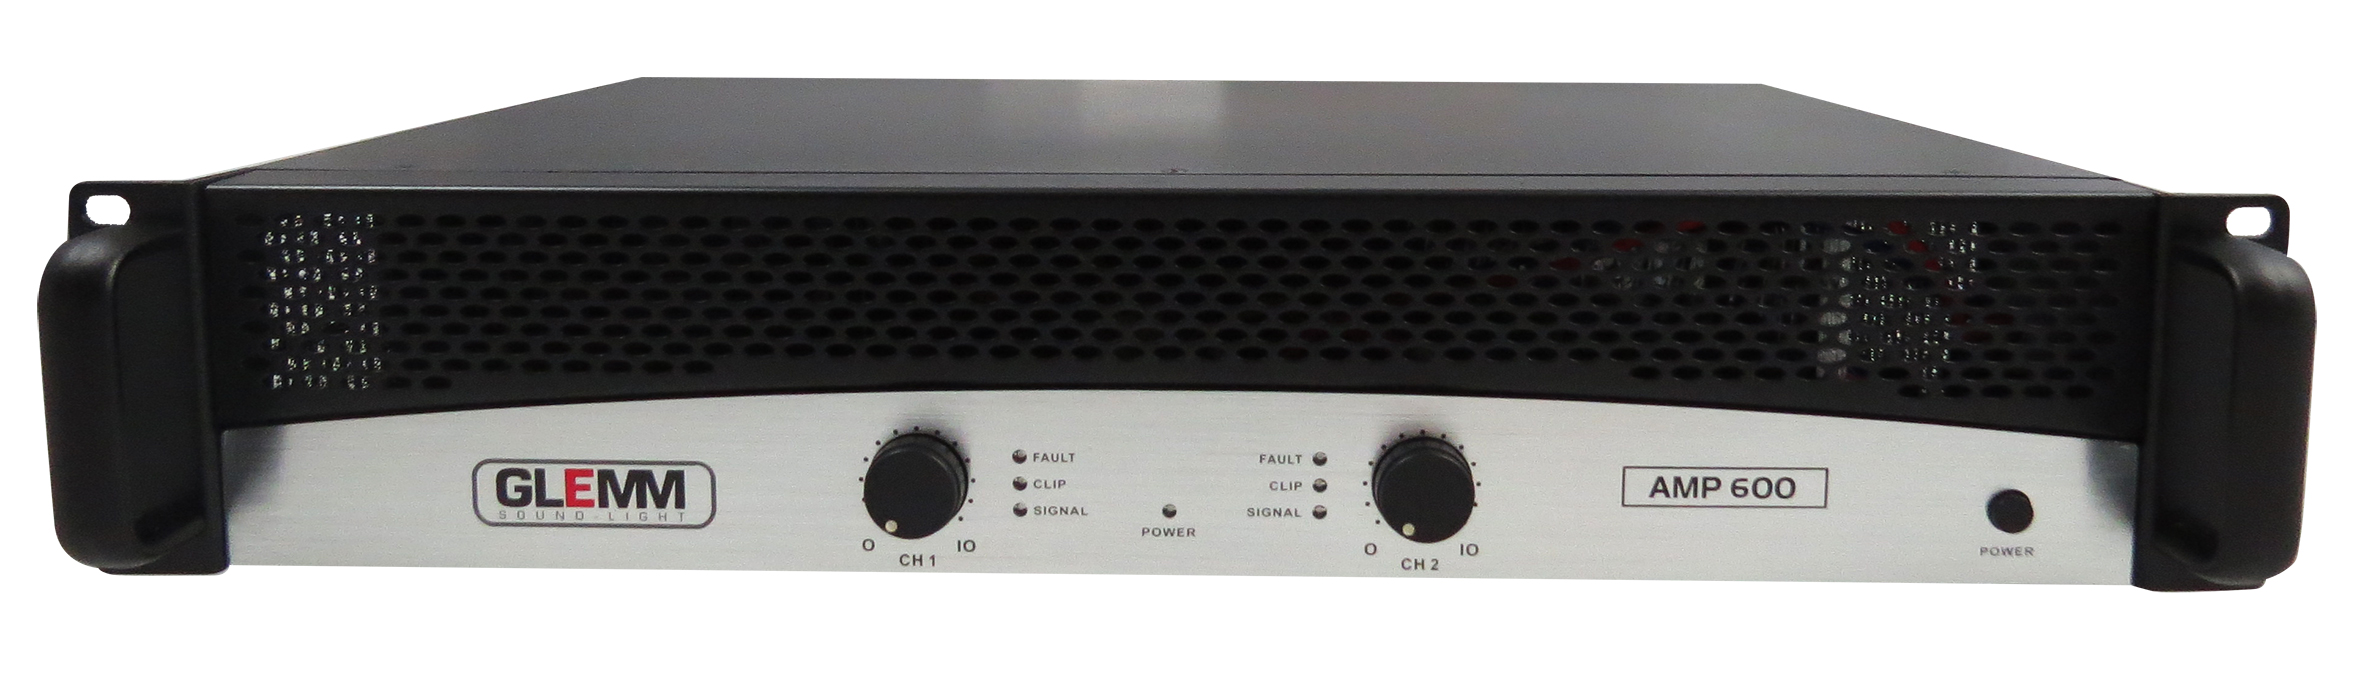 Karma AMP 600 - Amplificatore stereo 2 x 600W